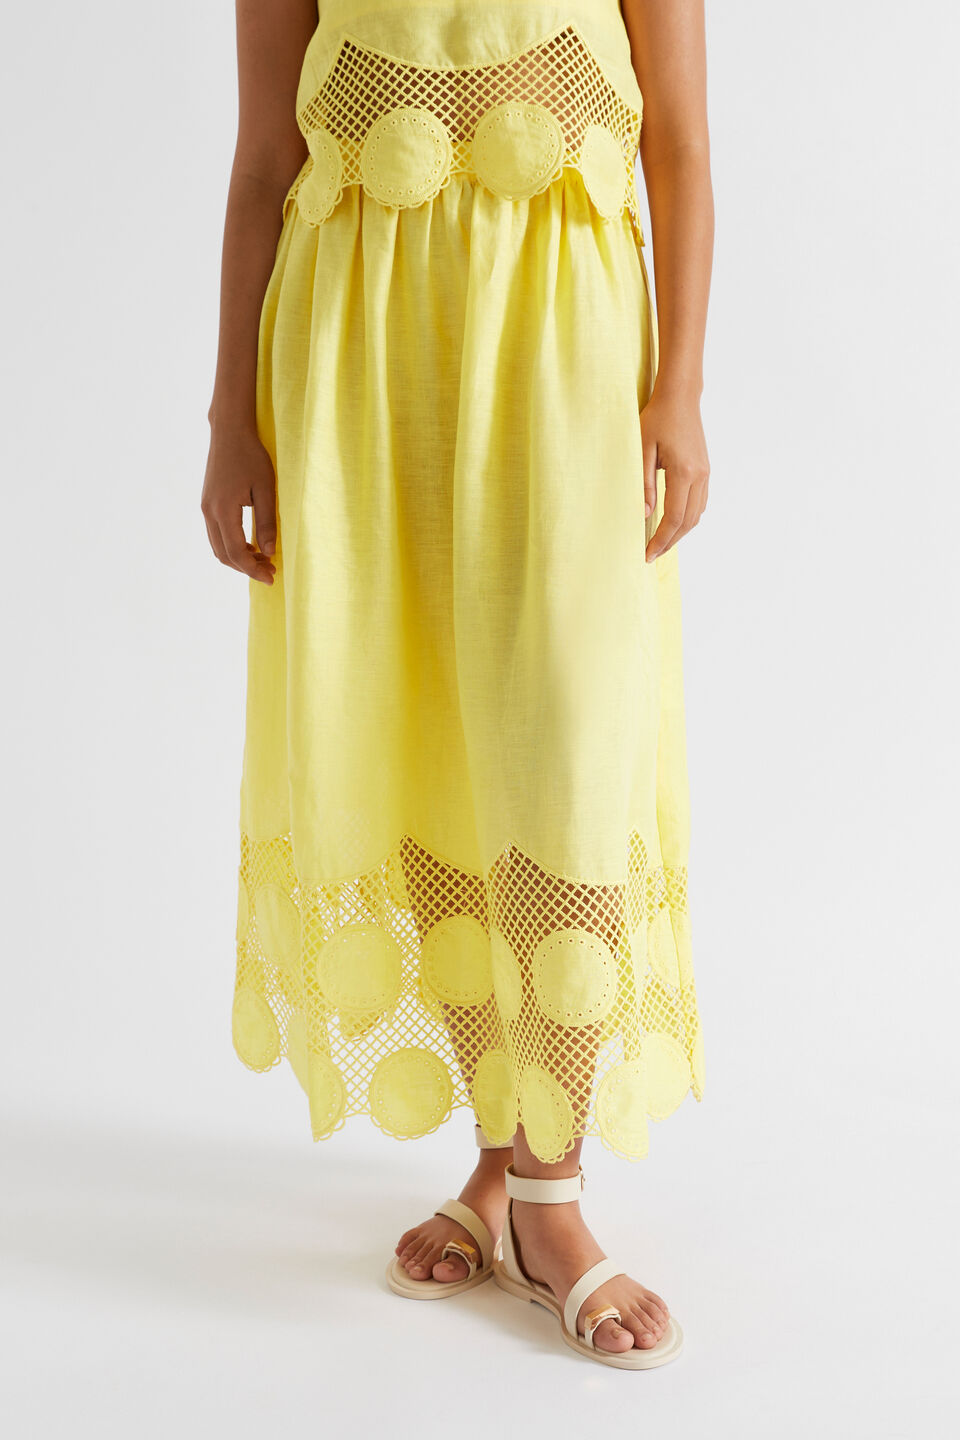 Embroidered Hem Panel Skirt  Lemon Drop